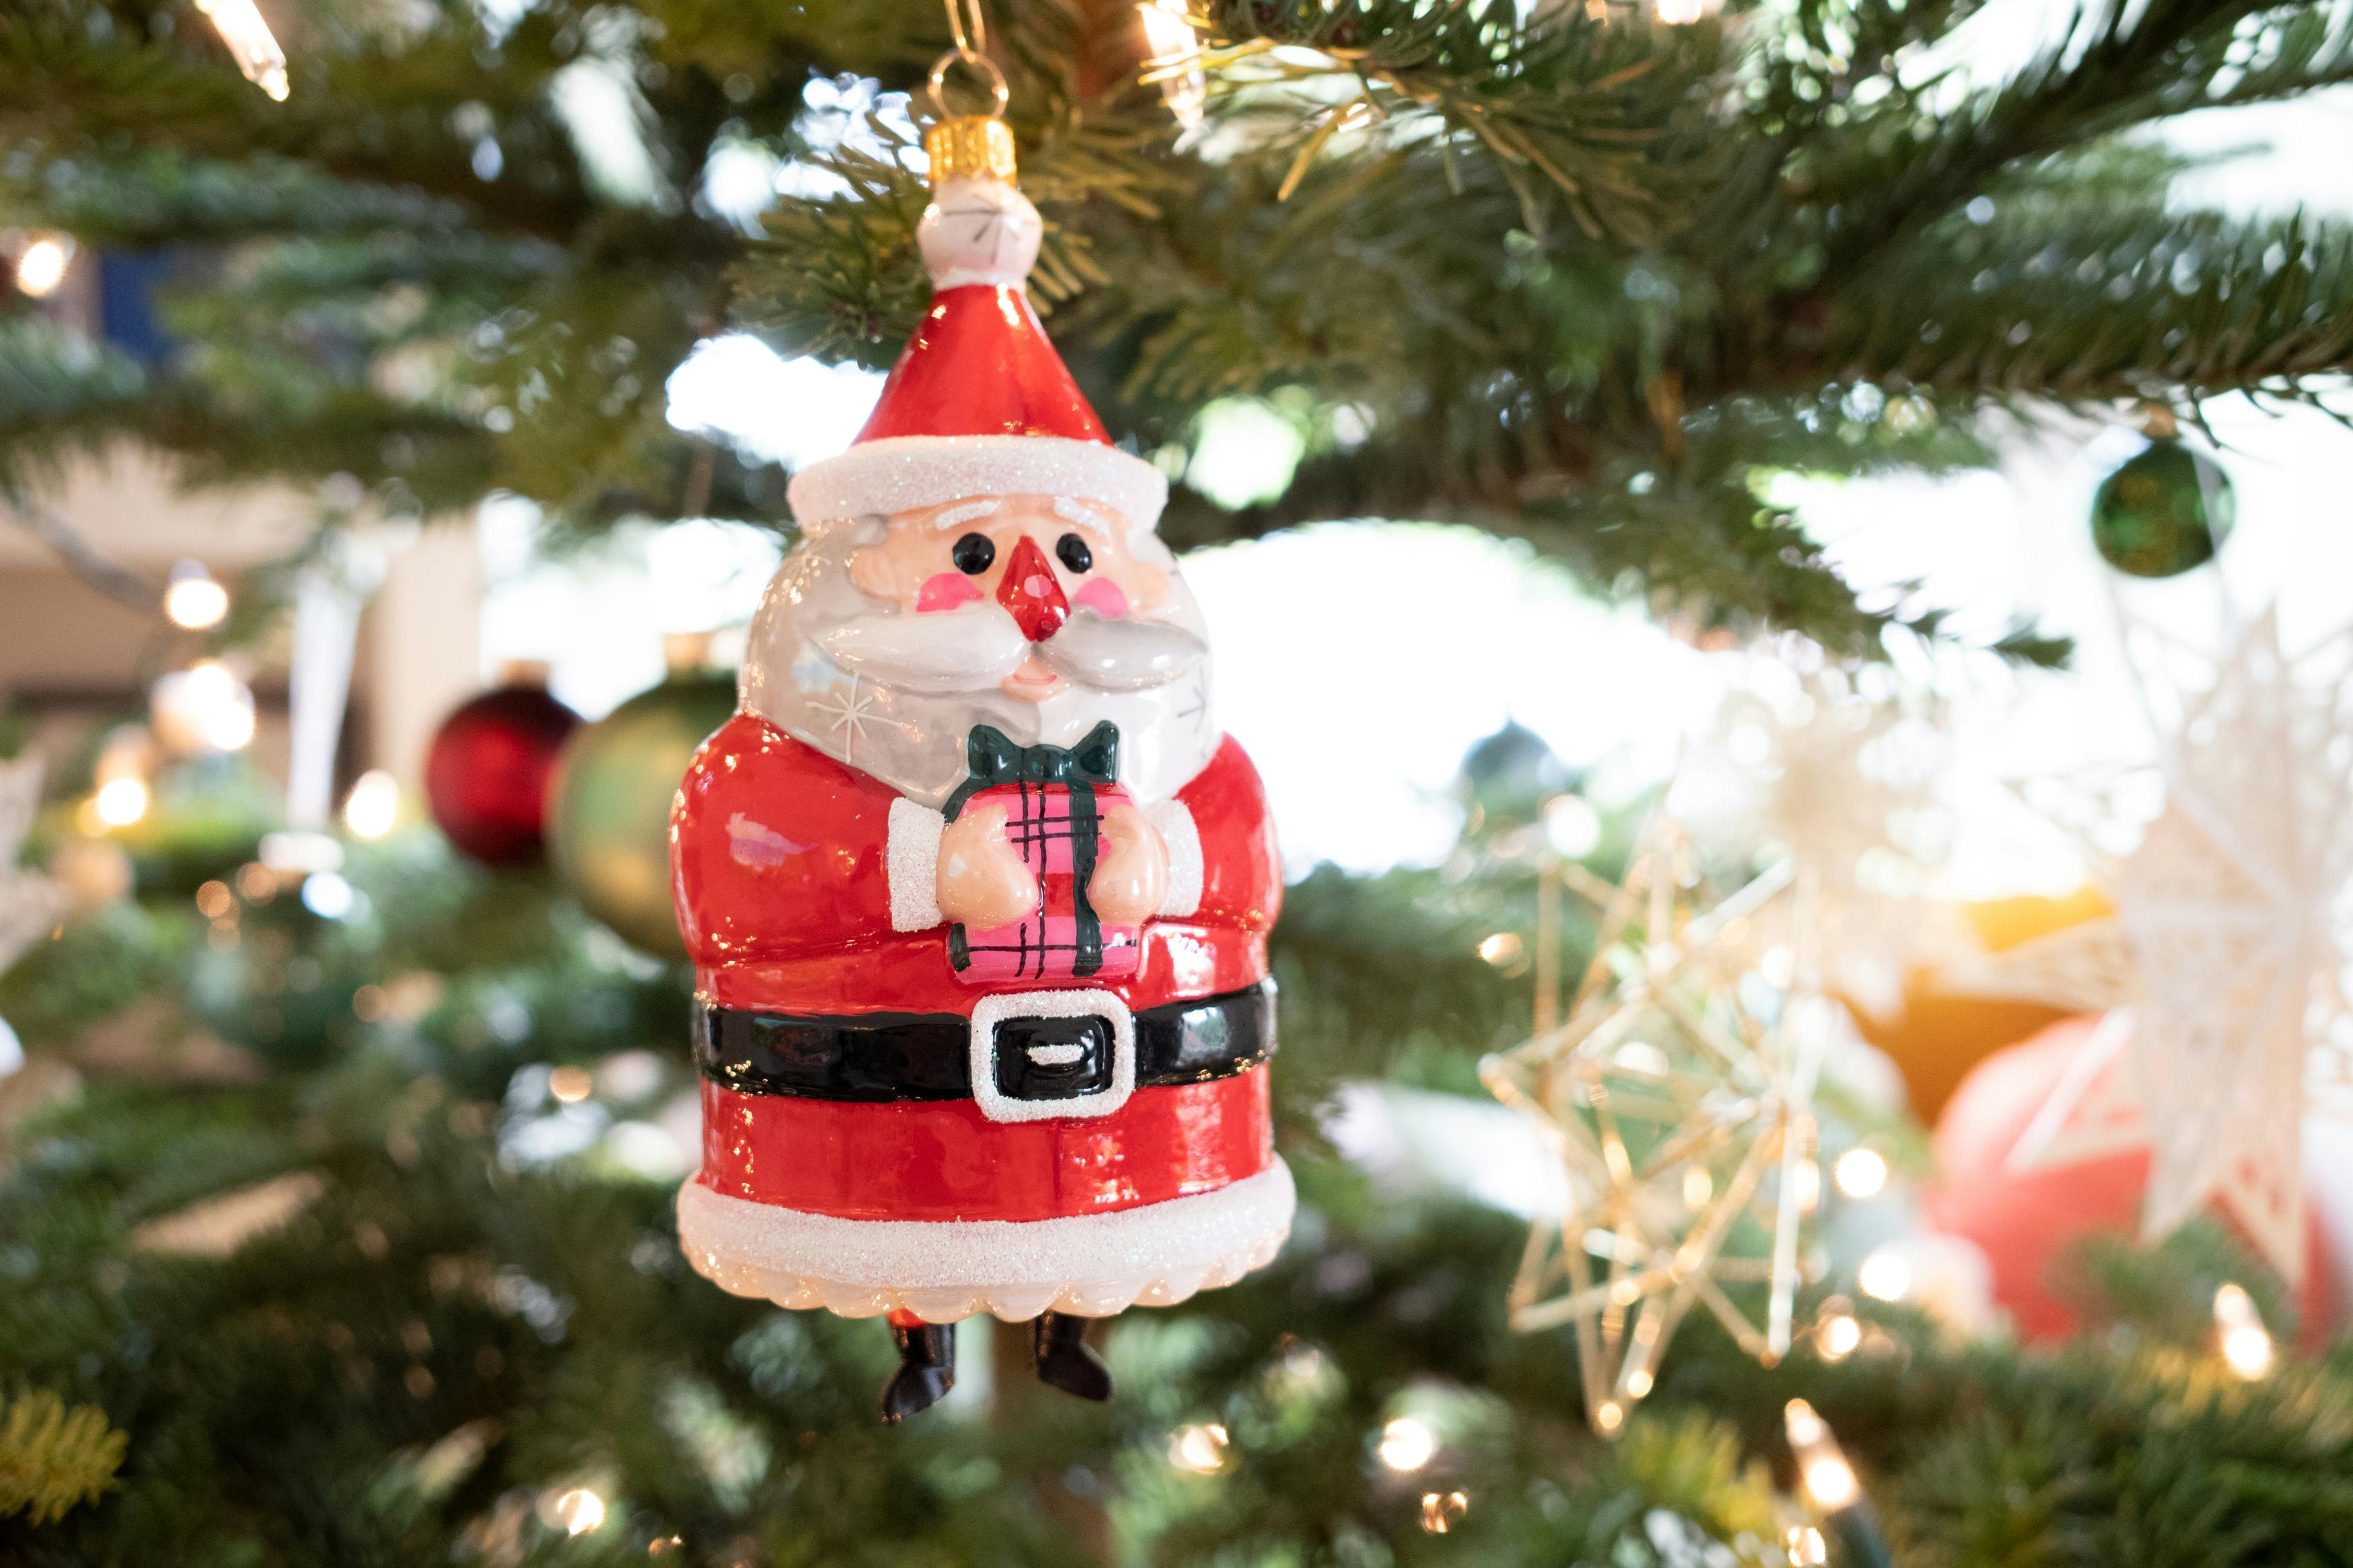 Exclusive 2022 Santa.com Ornament on tree